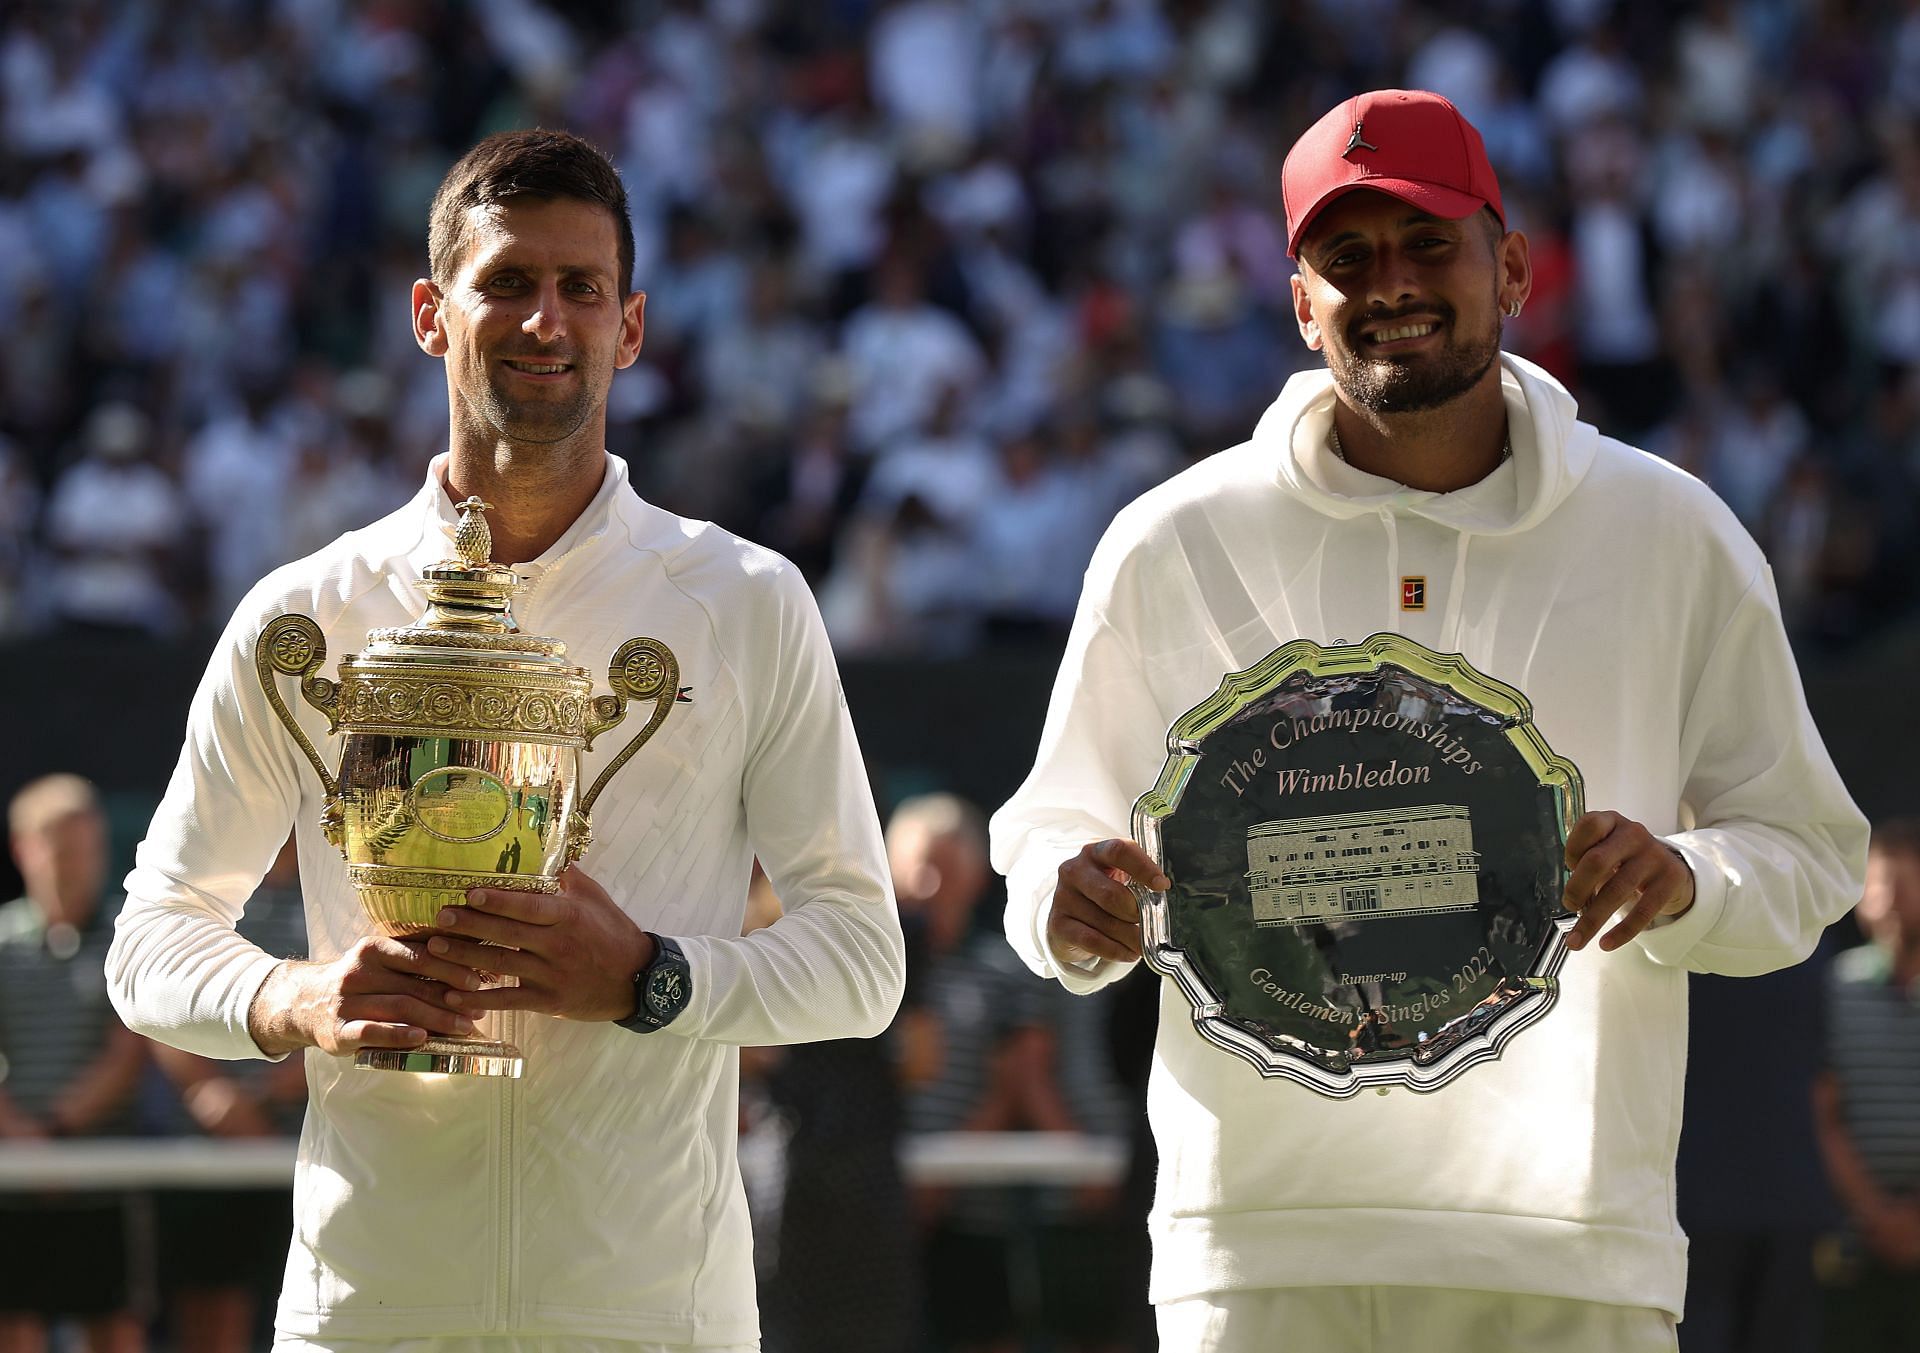 Djokovic beat Kyrgios in the 2022 Wimbledon final in four sets